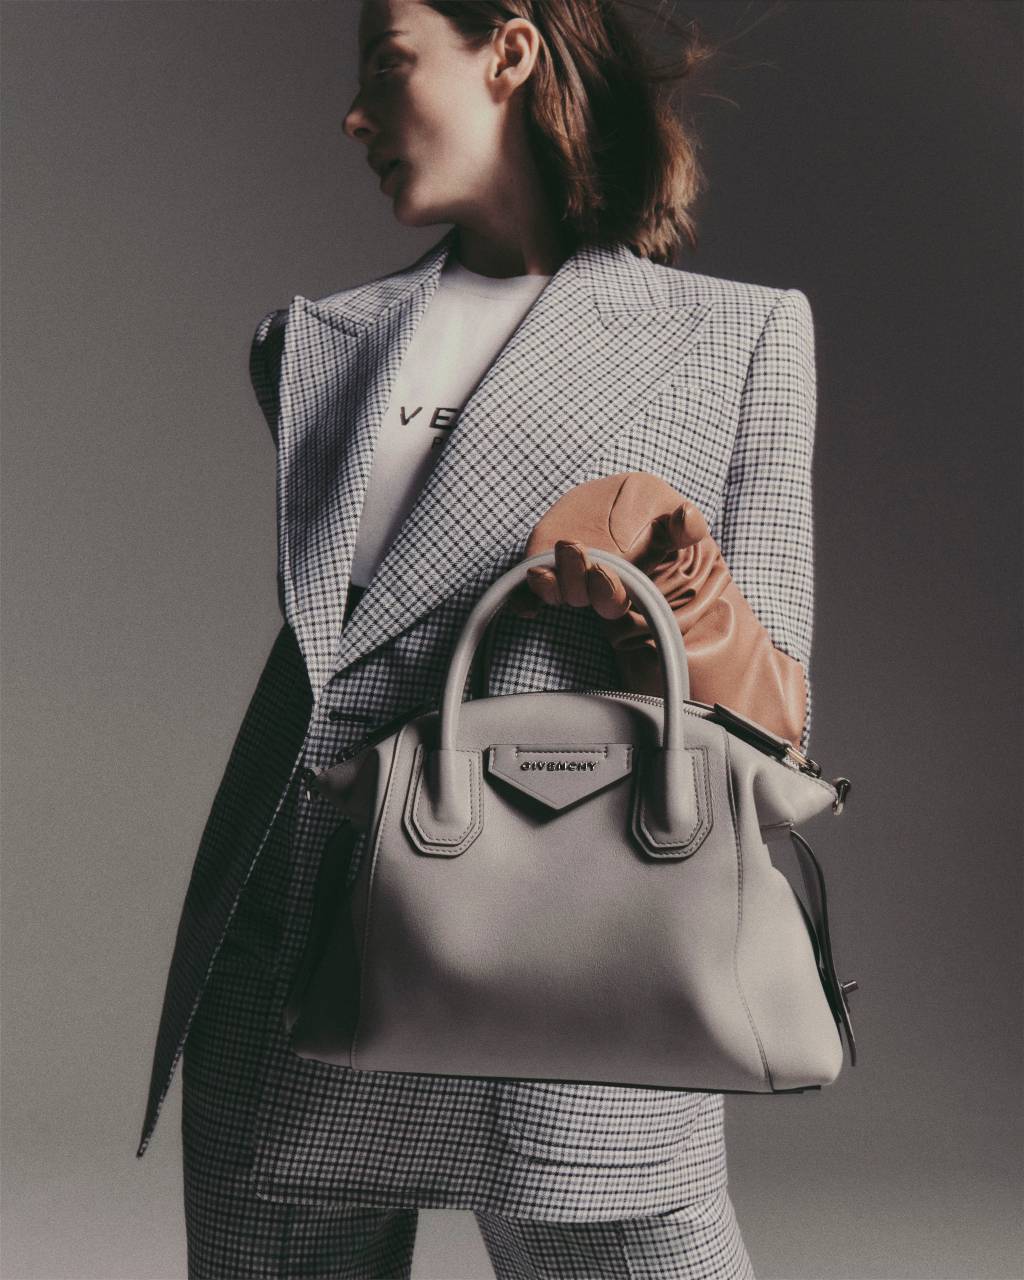 See Givenchy's Latest Handbag For Fall/Winter 2020 - A&E Magazine